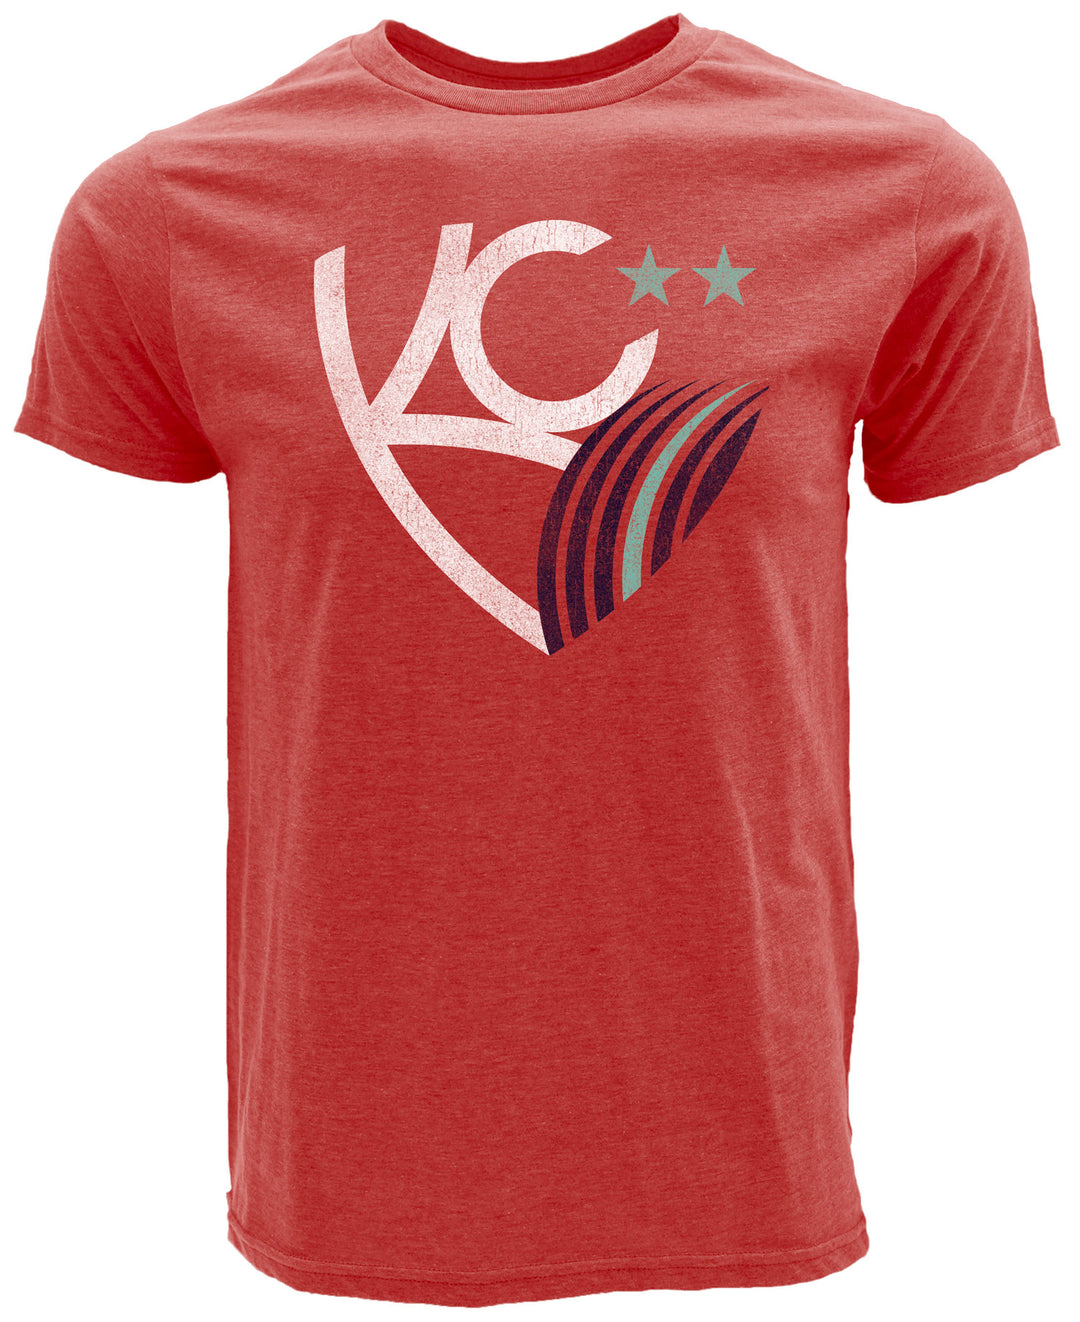 SimplySplendidStudio Kansas City Shirt Women, KC Heart Shirts, Kansas City Tshirts, KC Tee, Kansas City Shirts for Women, Kansas Clothing, KC Shirt